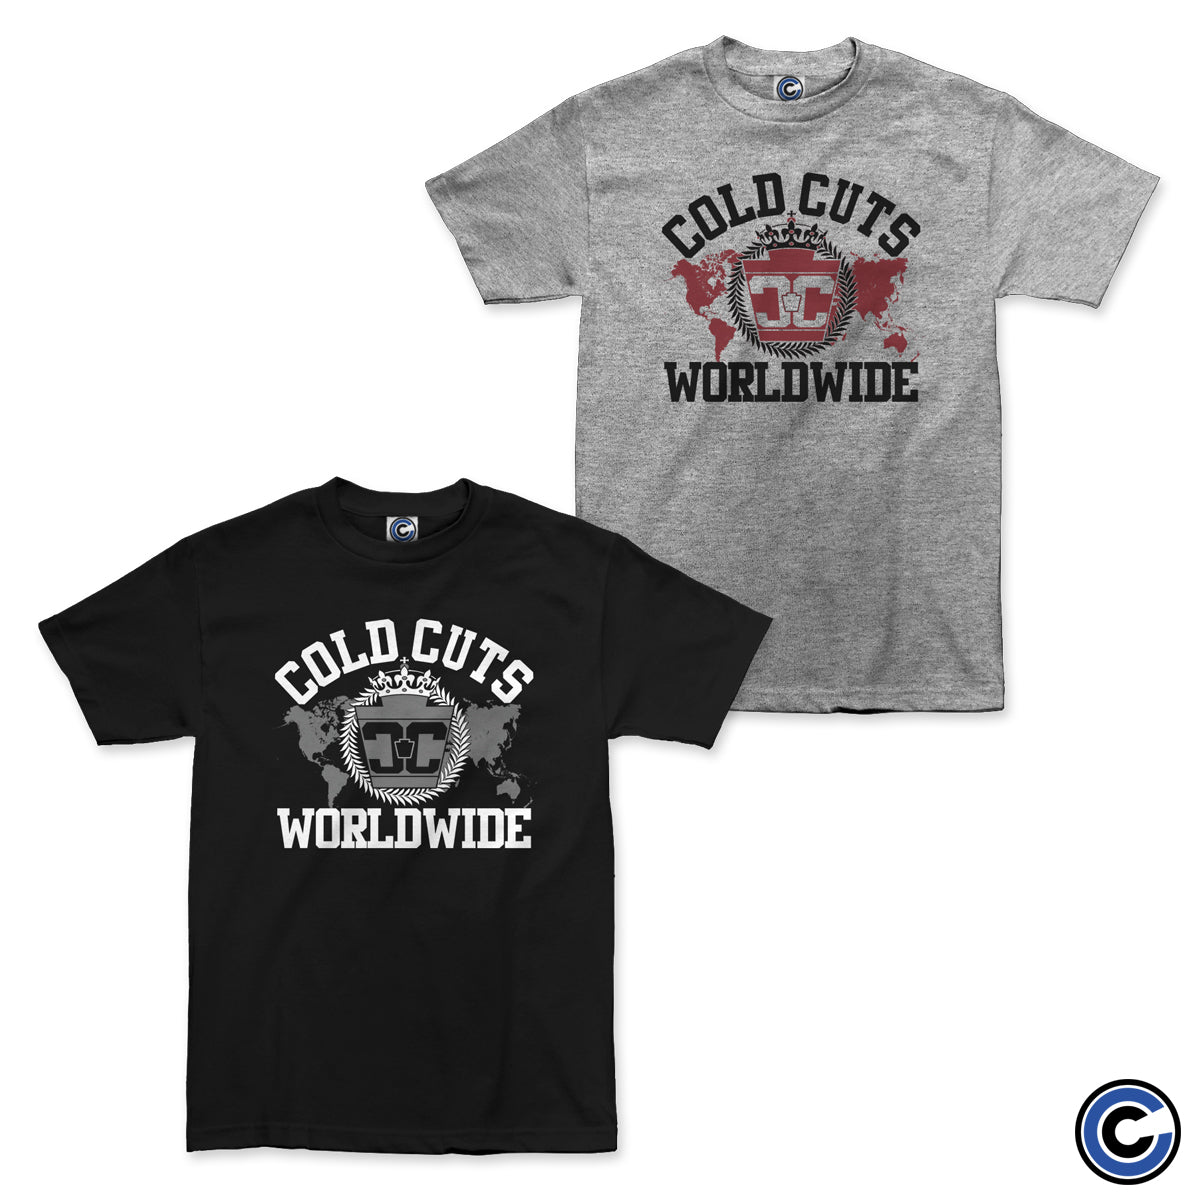 Cold Cuts "World Wide" Shirt